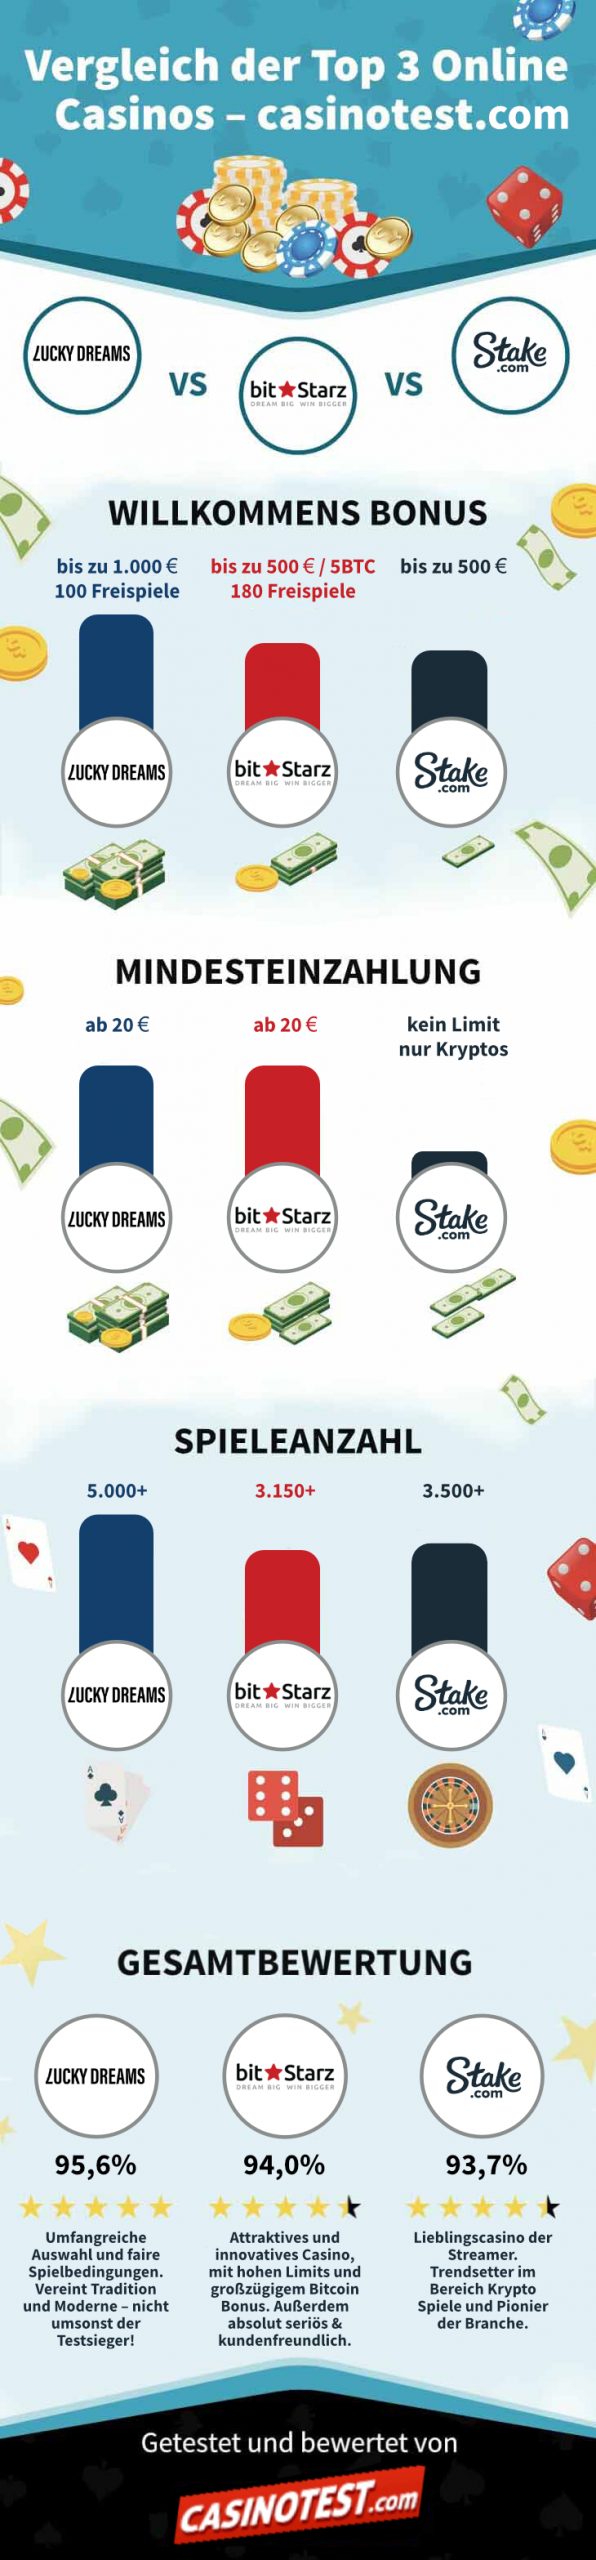 infografik-top-3-casinos-vergleich-1-scaled